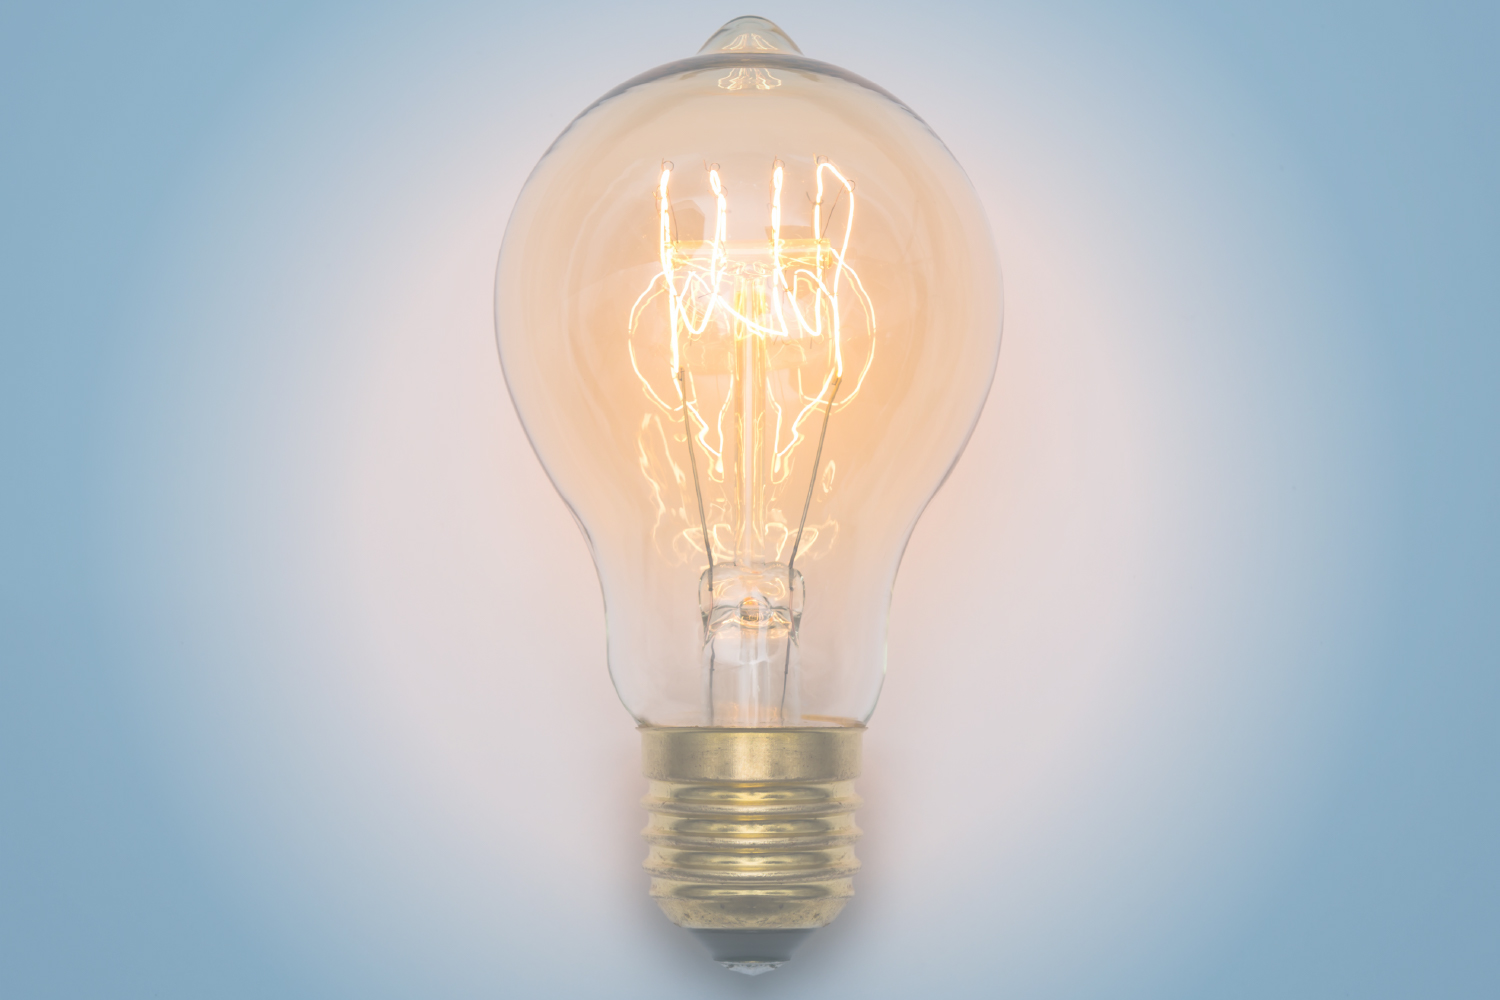 LED Lights vs Traditional Incandescent Bulbs